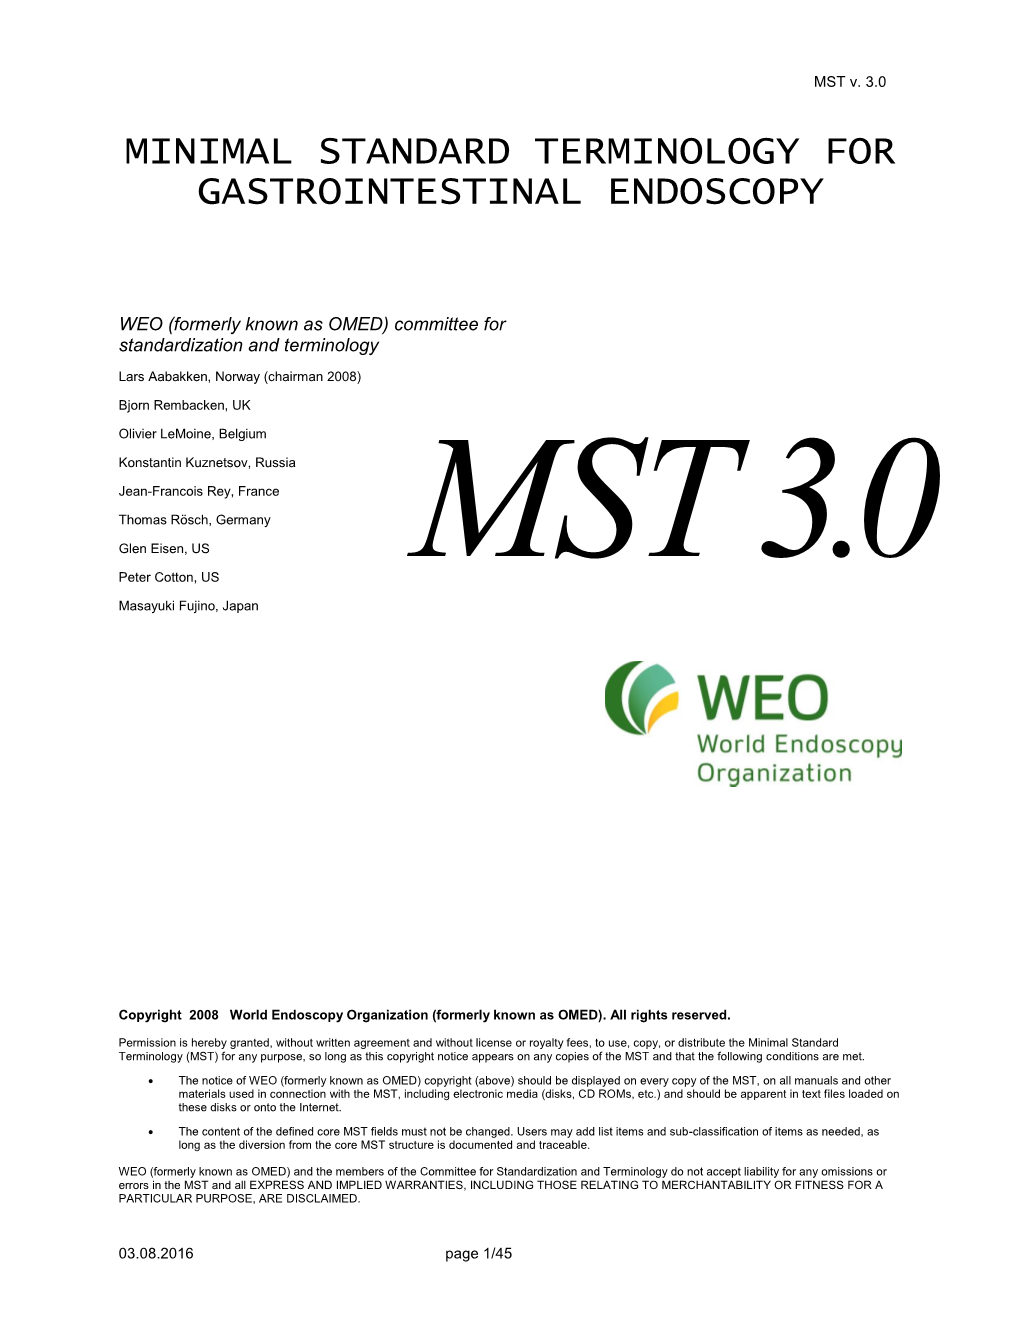 Minimal Standard Terminology for Gastrointestinal Endoscopy